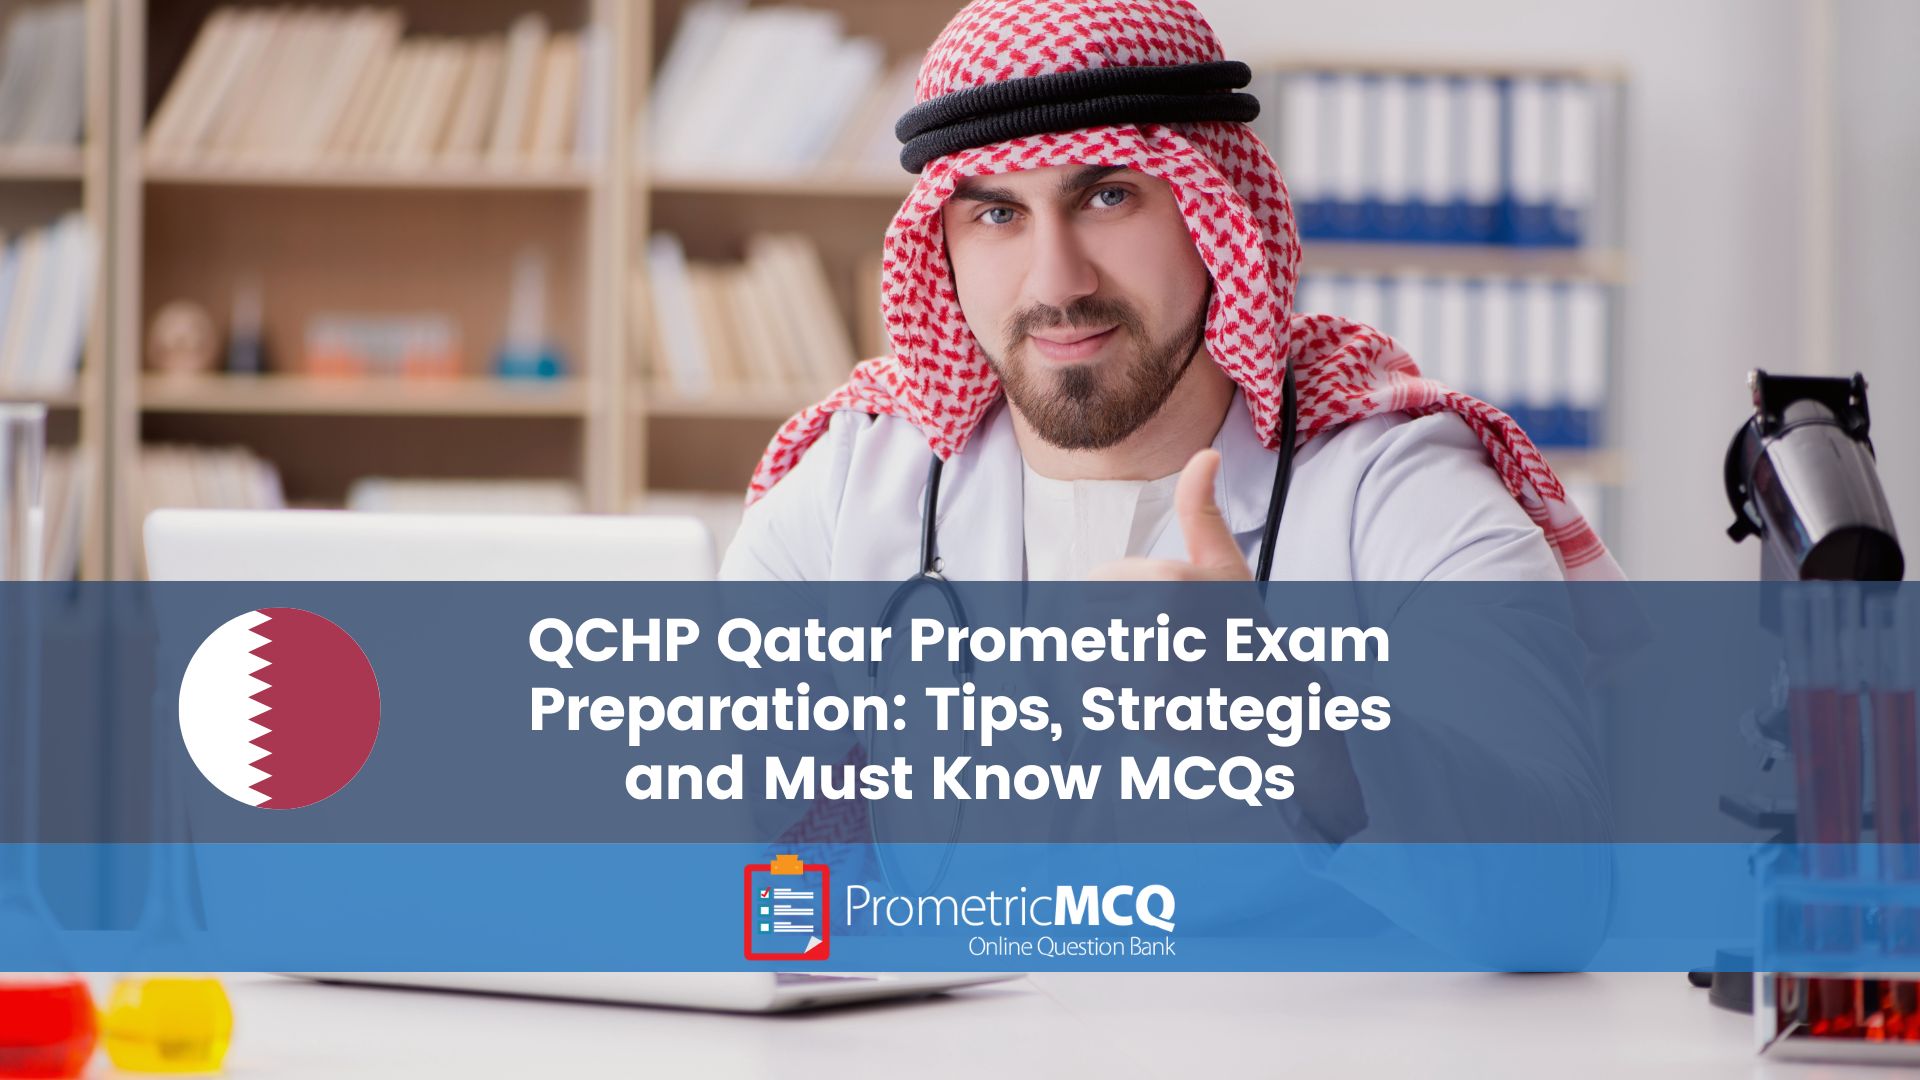 QCHP Qatar Prometric Exam Preparation- Tips, Strategies and Must Know MCQs